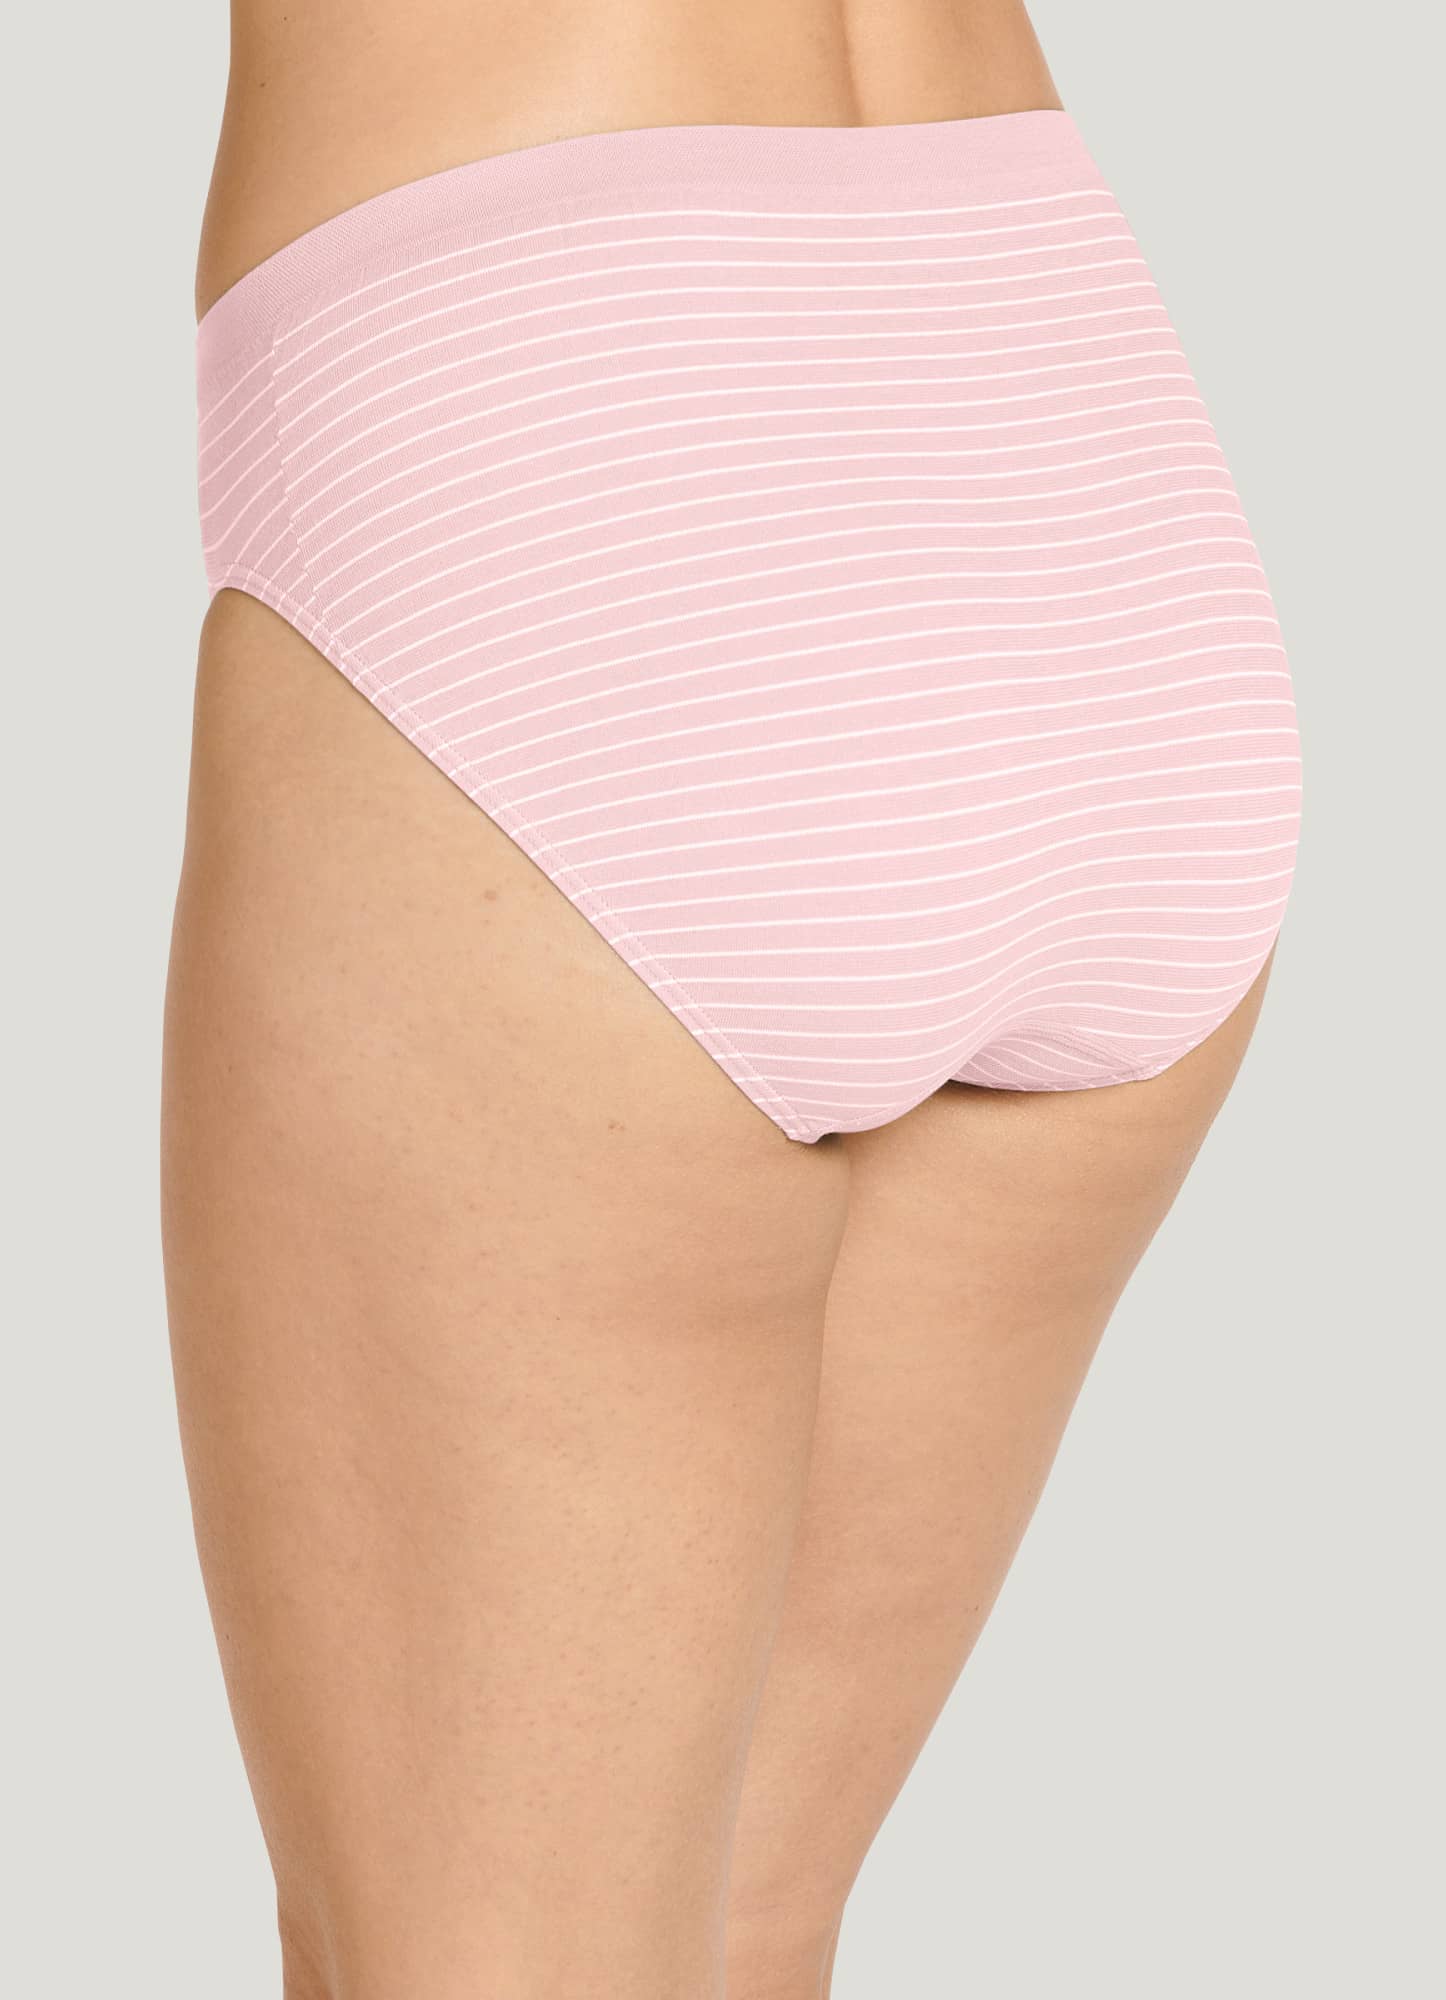 Jockey Women's 100% Cotton Panties Briefs Size 7 Pkg/3 NEW